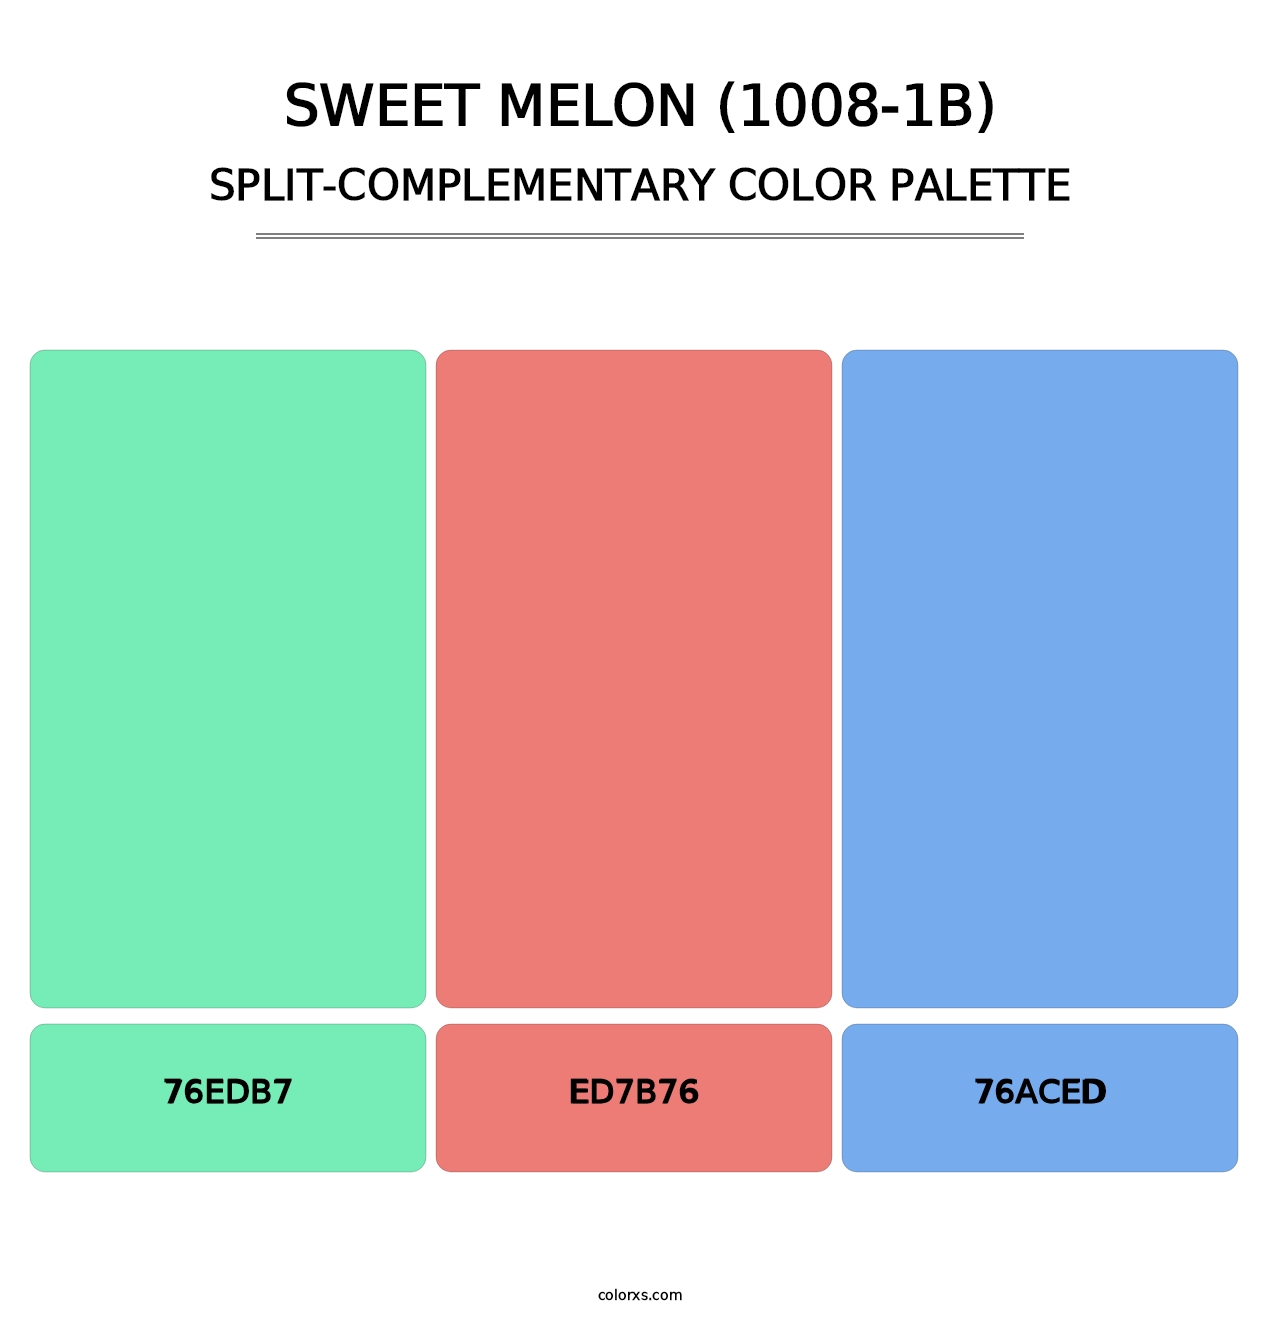 Sweet Melon (1008-1B) - Split-Complementary Color Palette